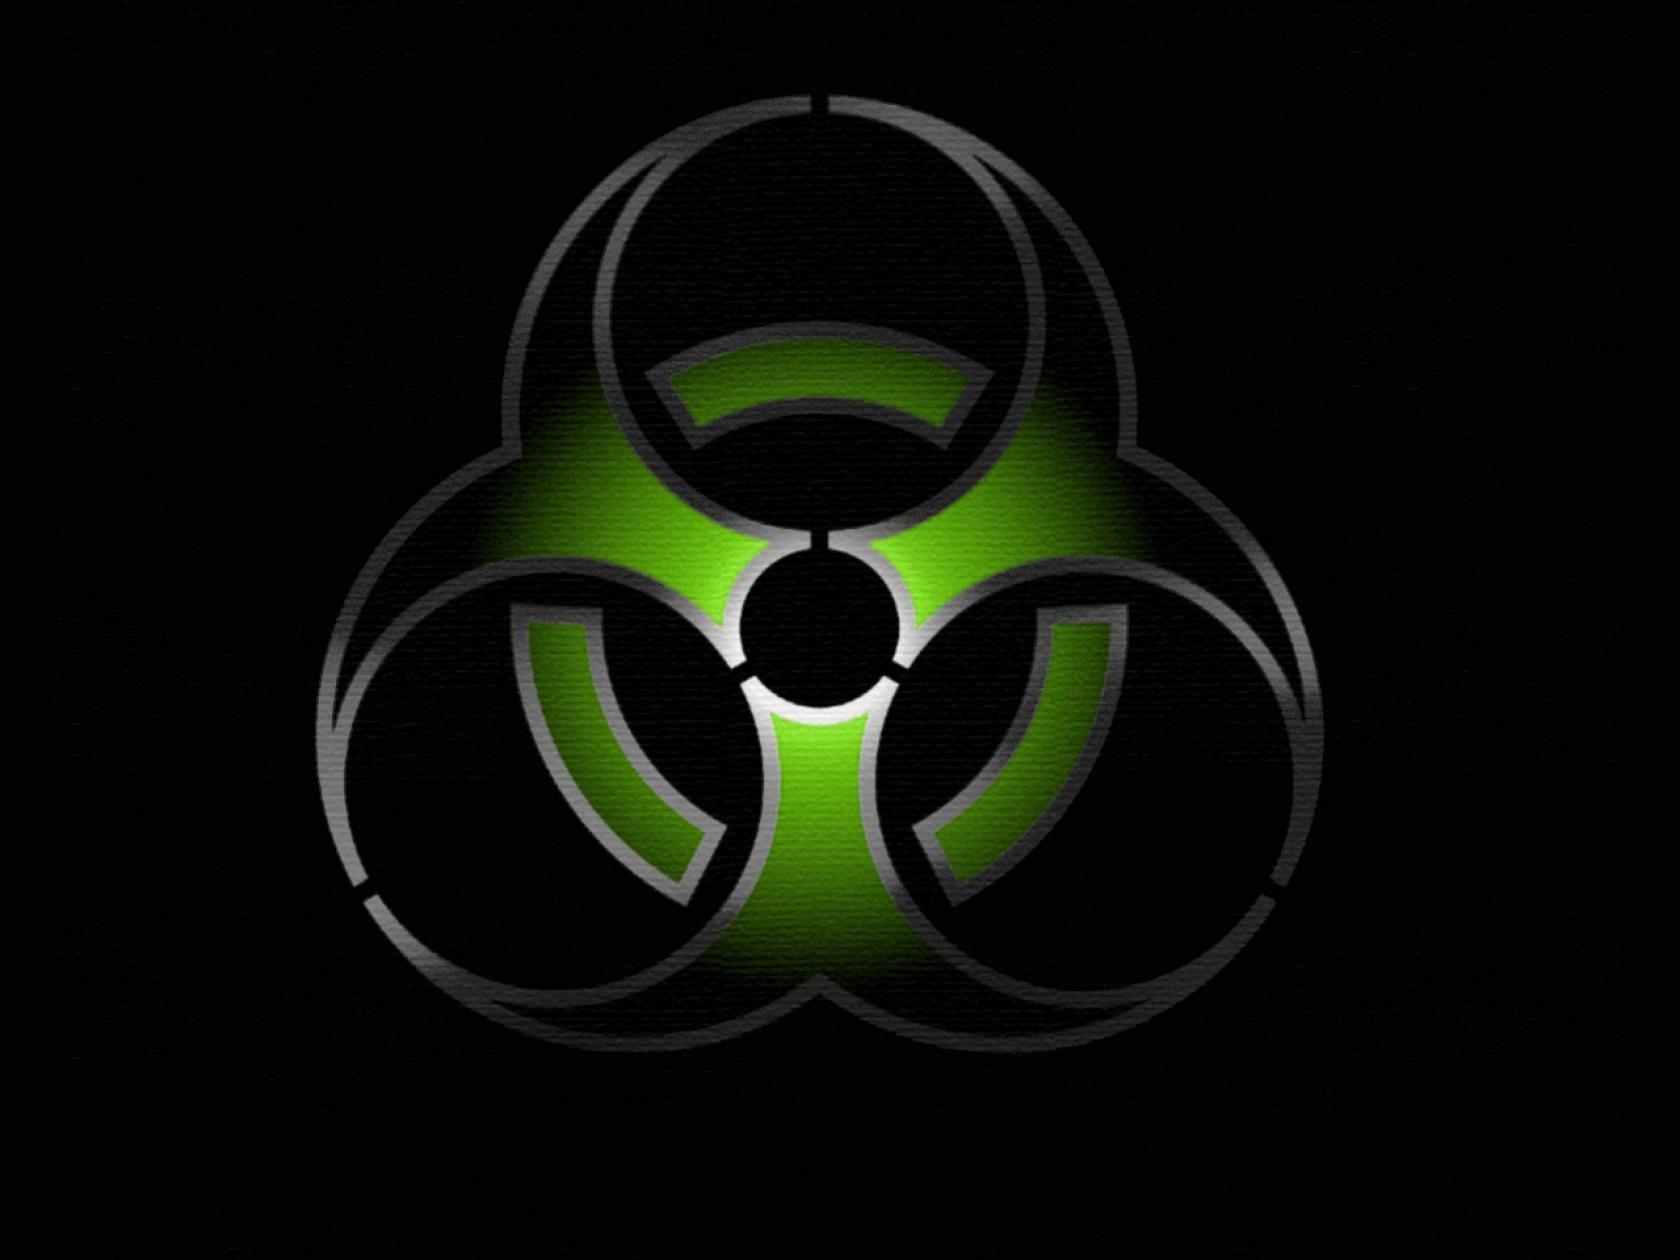 Biohazard Symbol Wallpaper. Cool